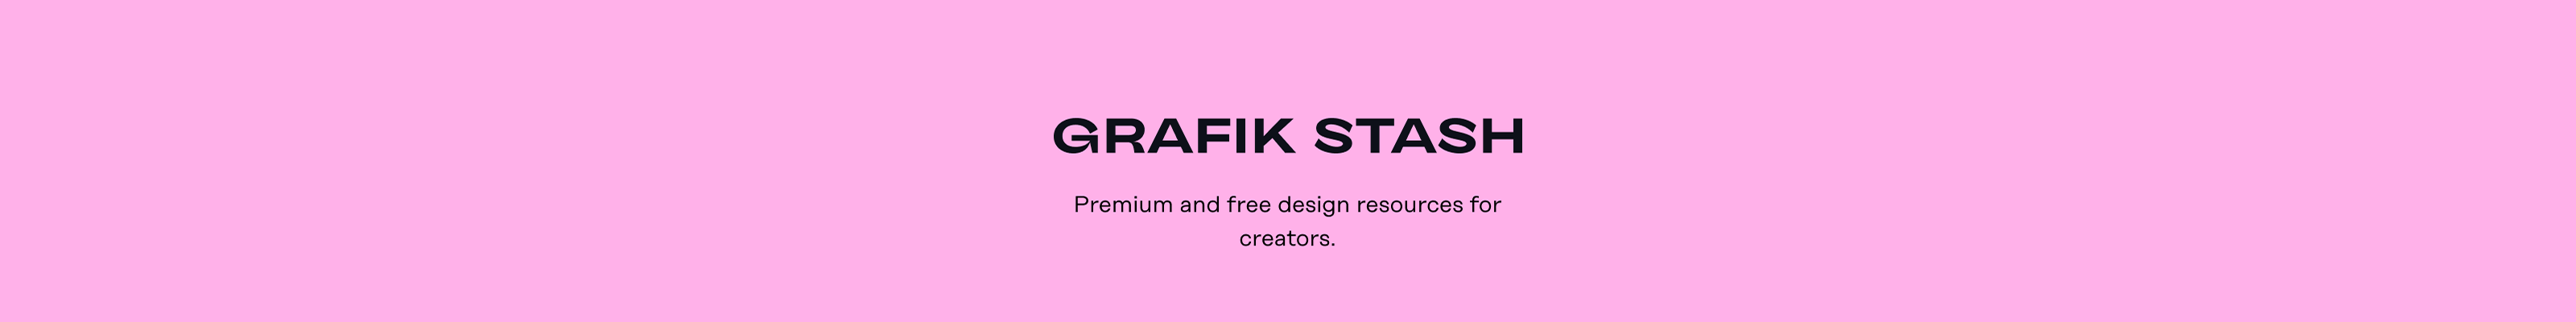 GRAFIK STASH's profile banner